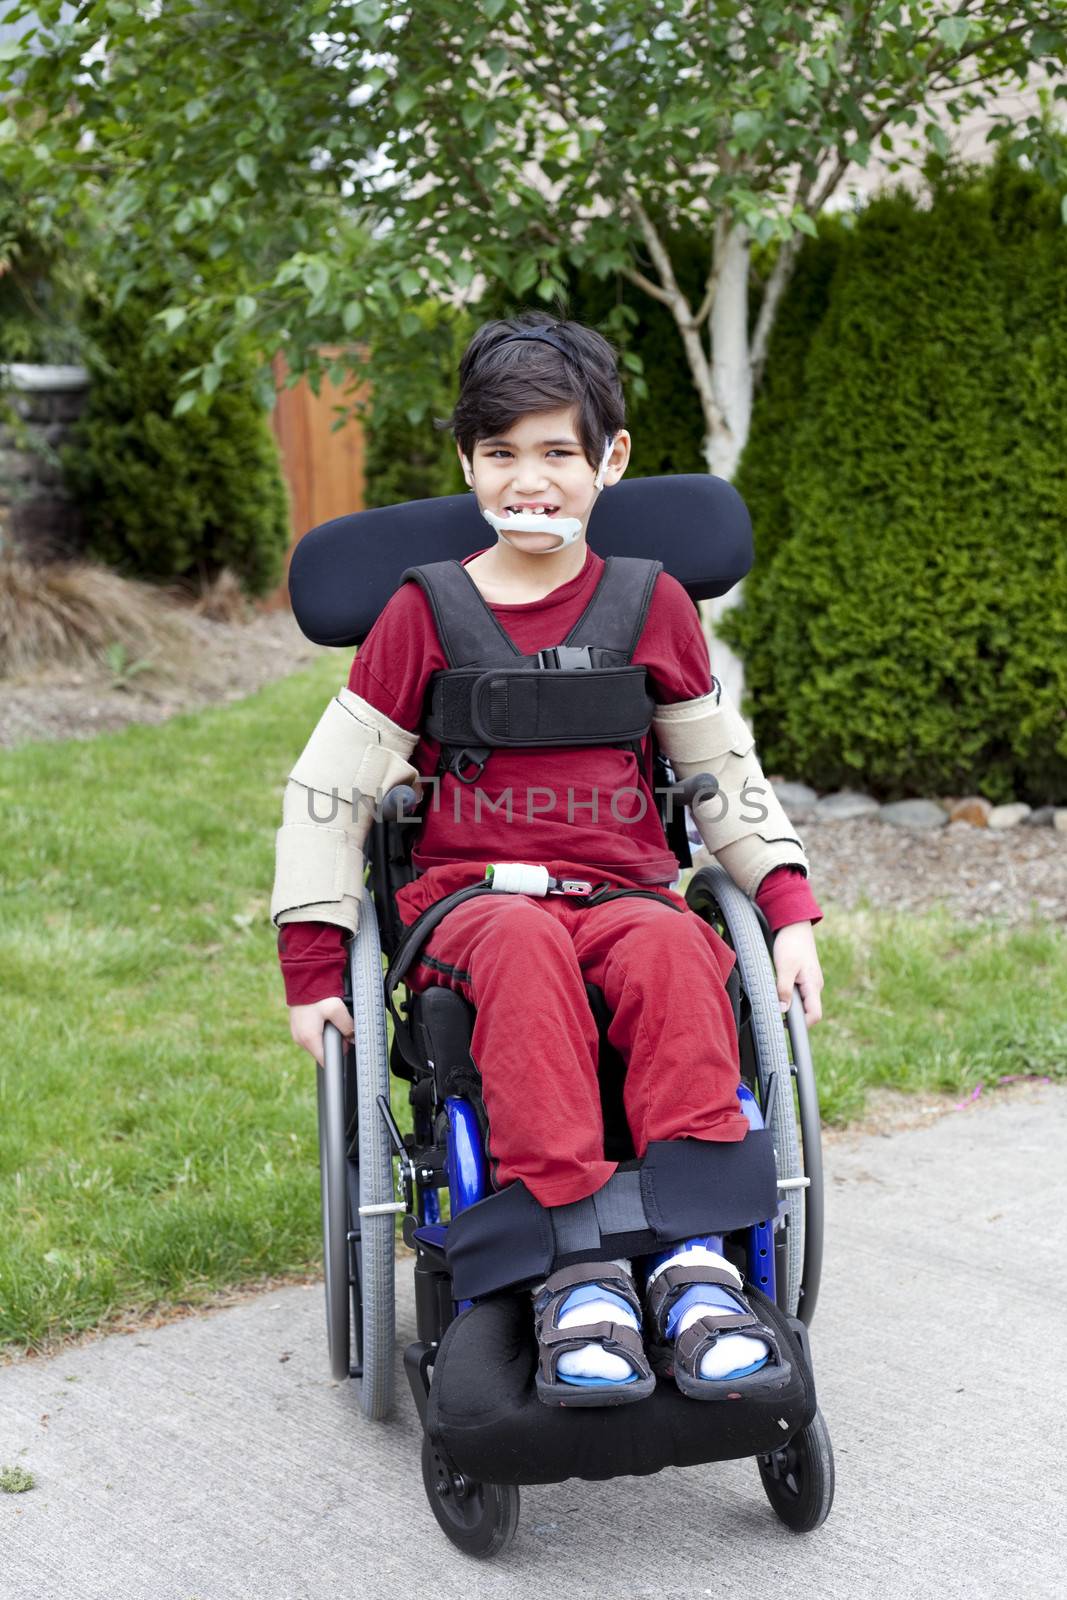 Disabled biracial six year old boy sitting in wheelchair on sidewalk